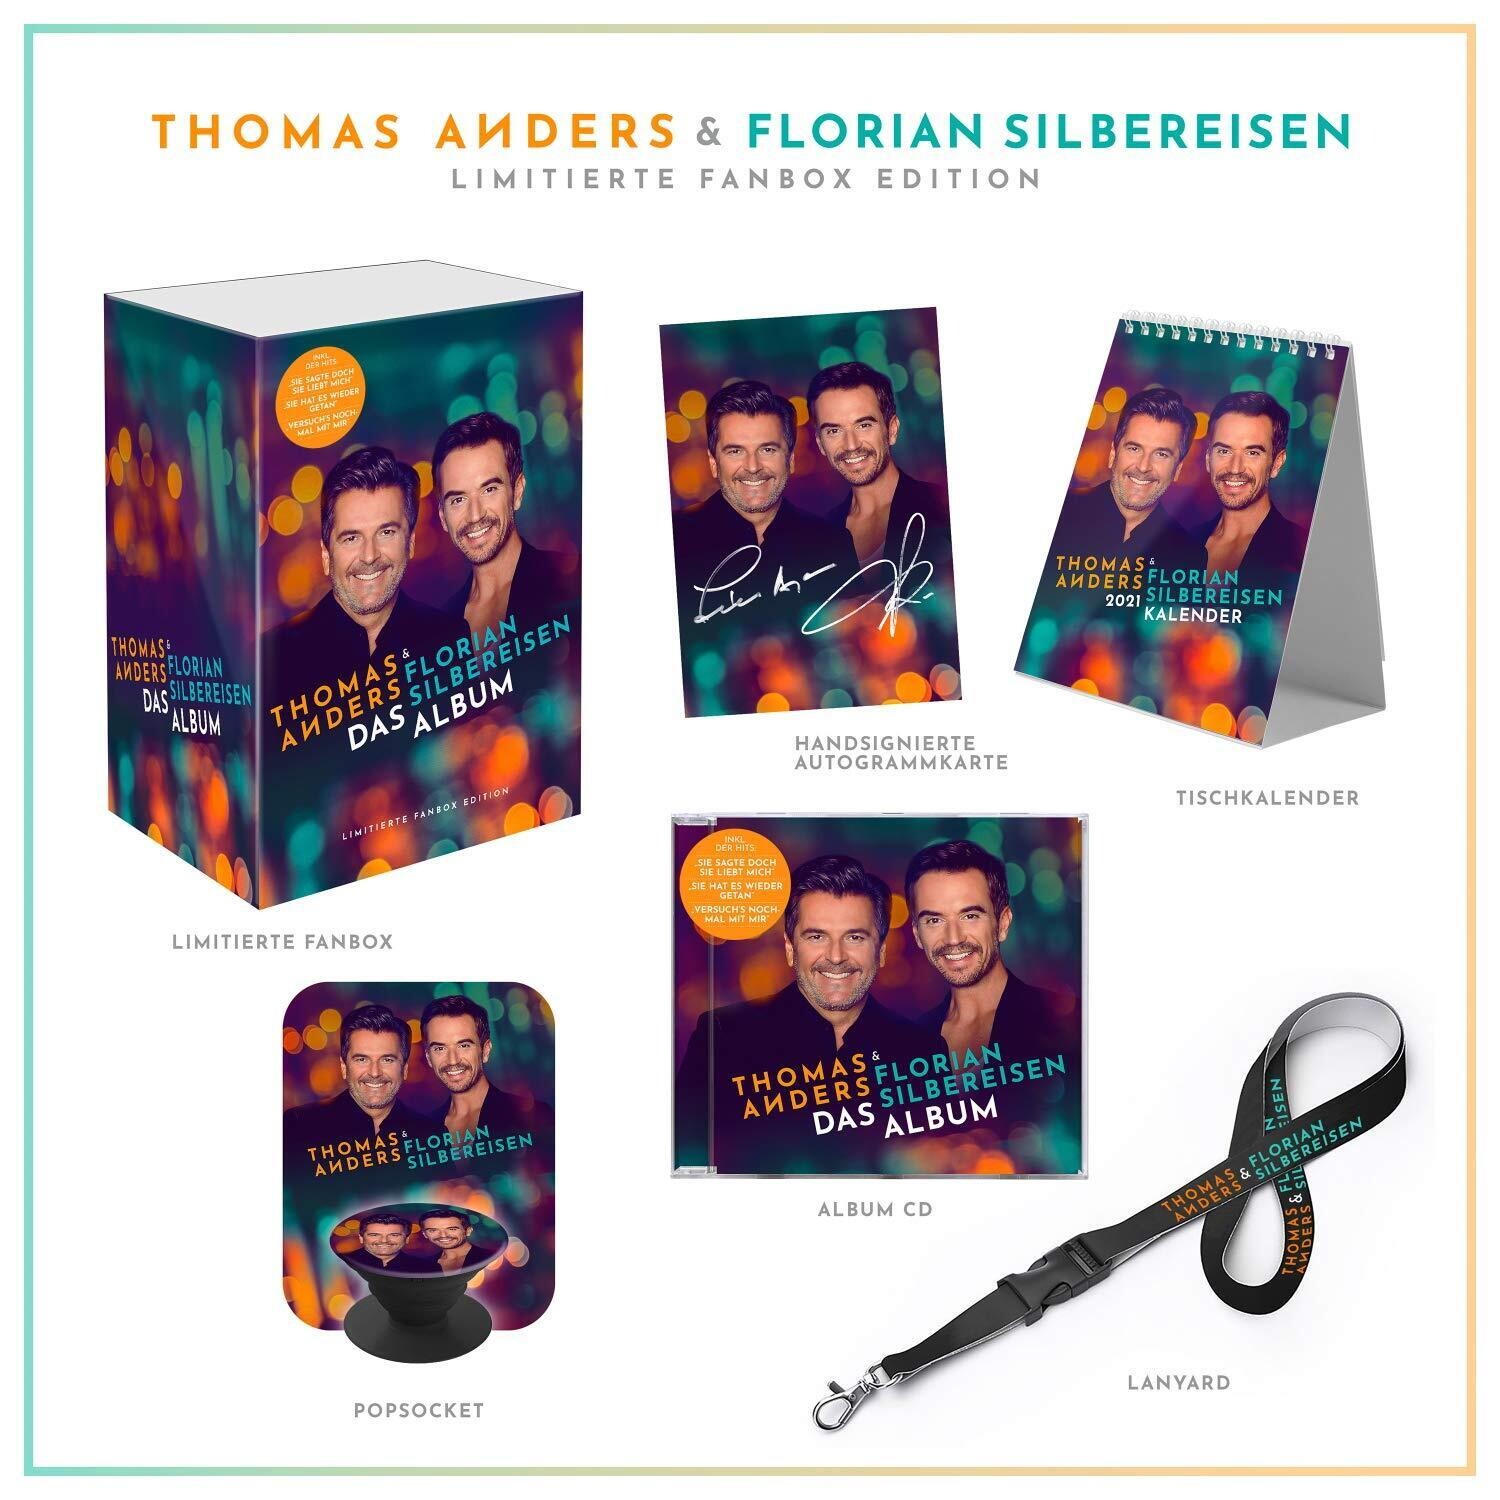 Thomas Anders & Florian Silbereisen - Das Album (Limited Fan Box)(2020) CD